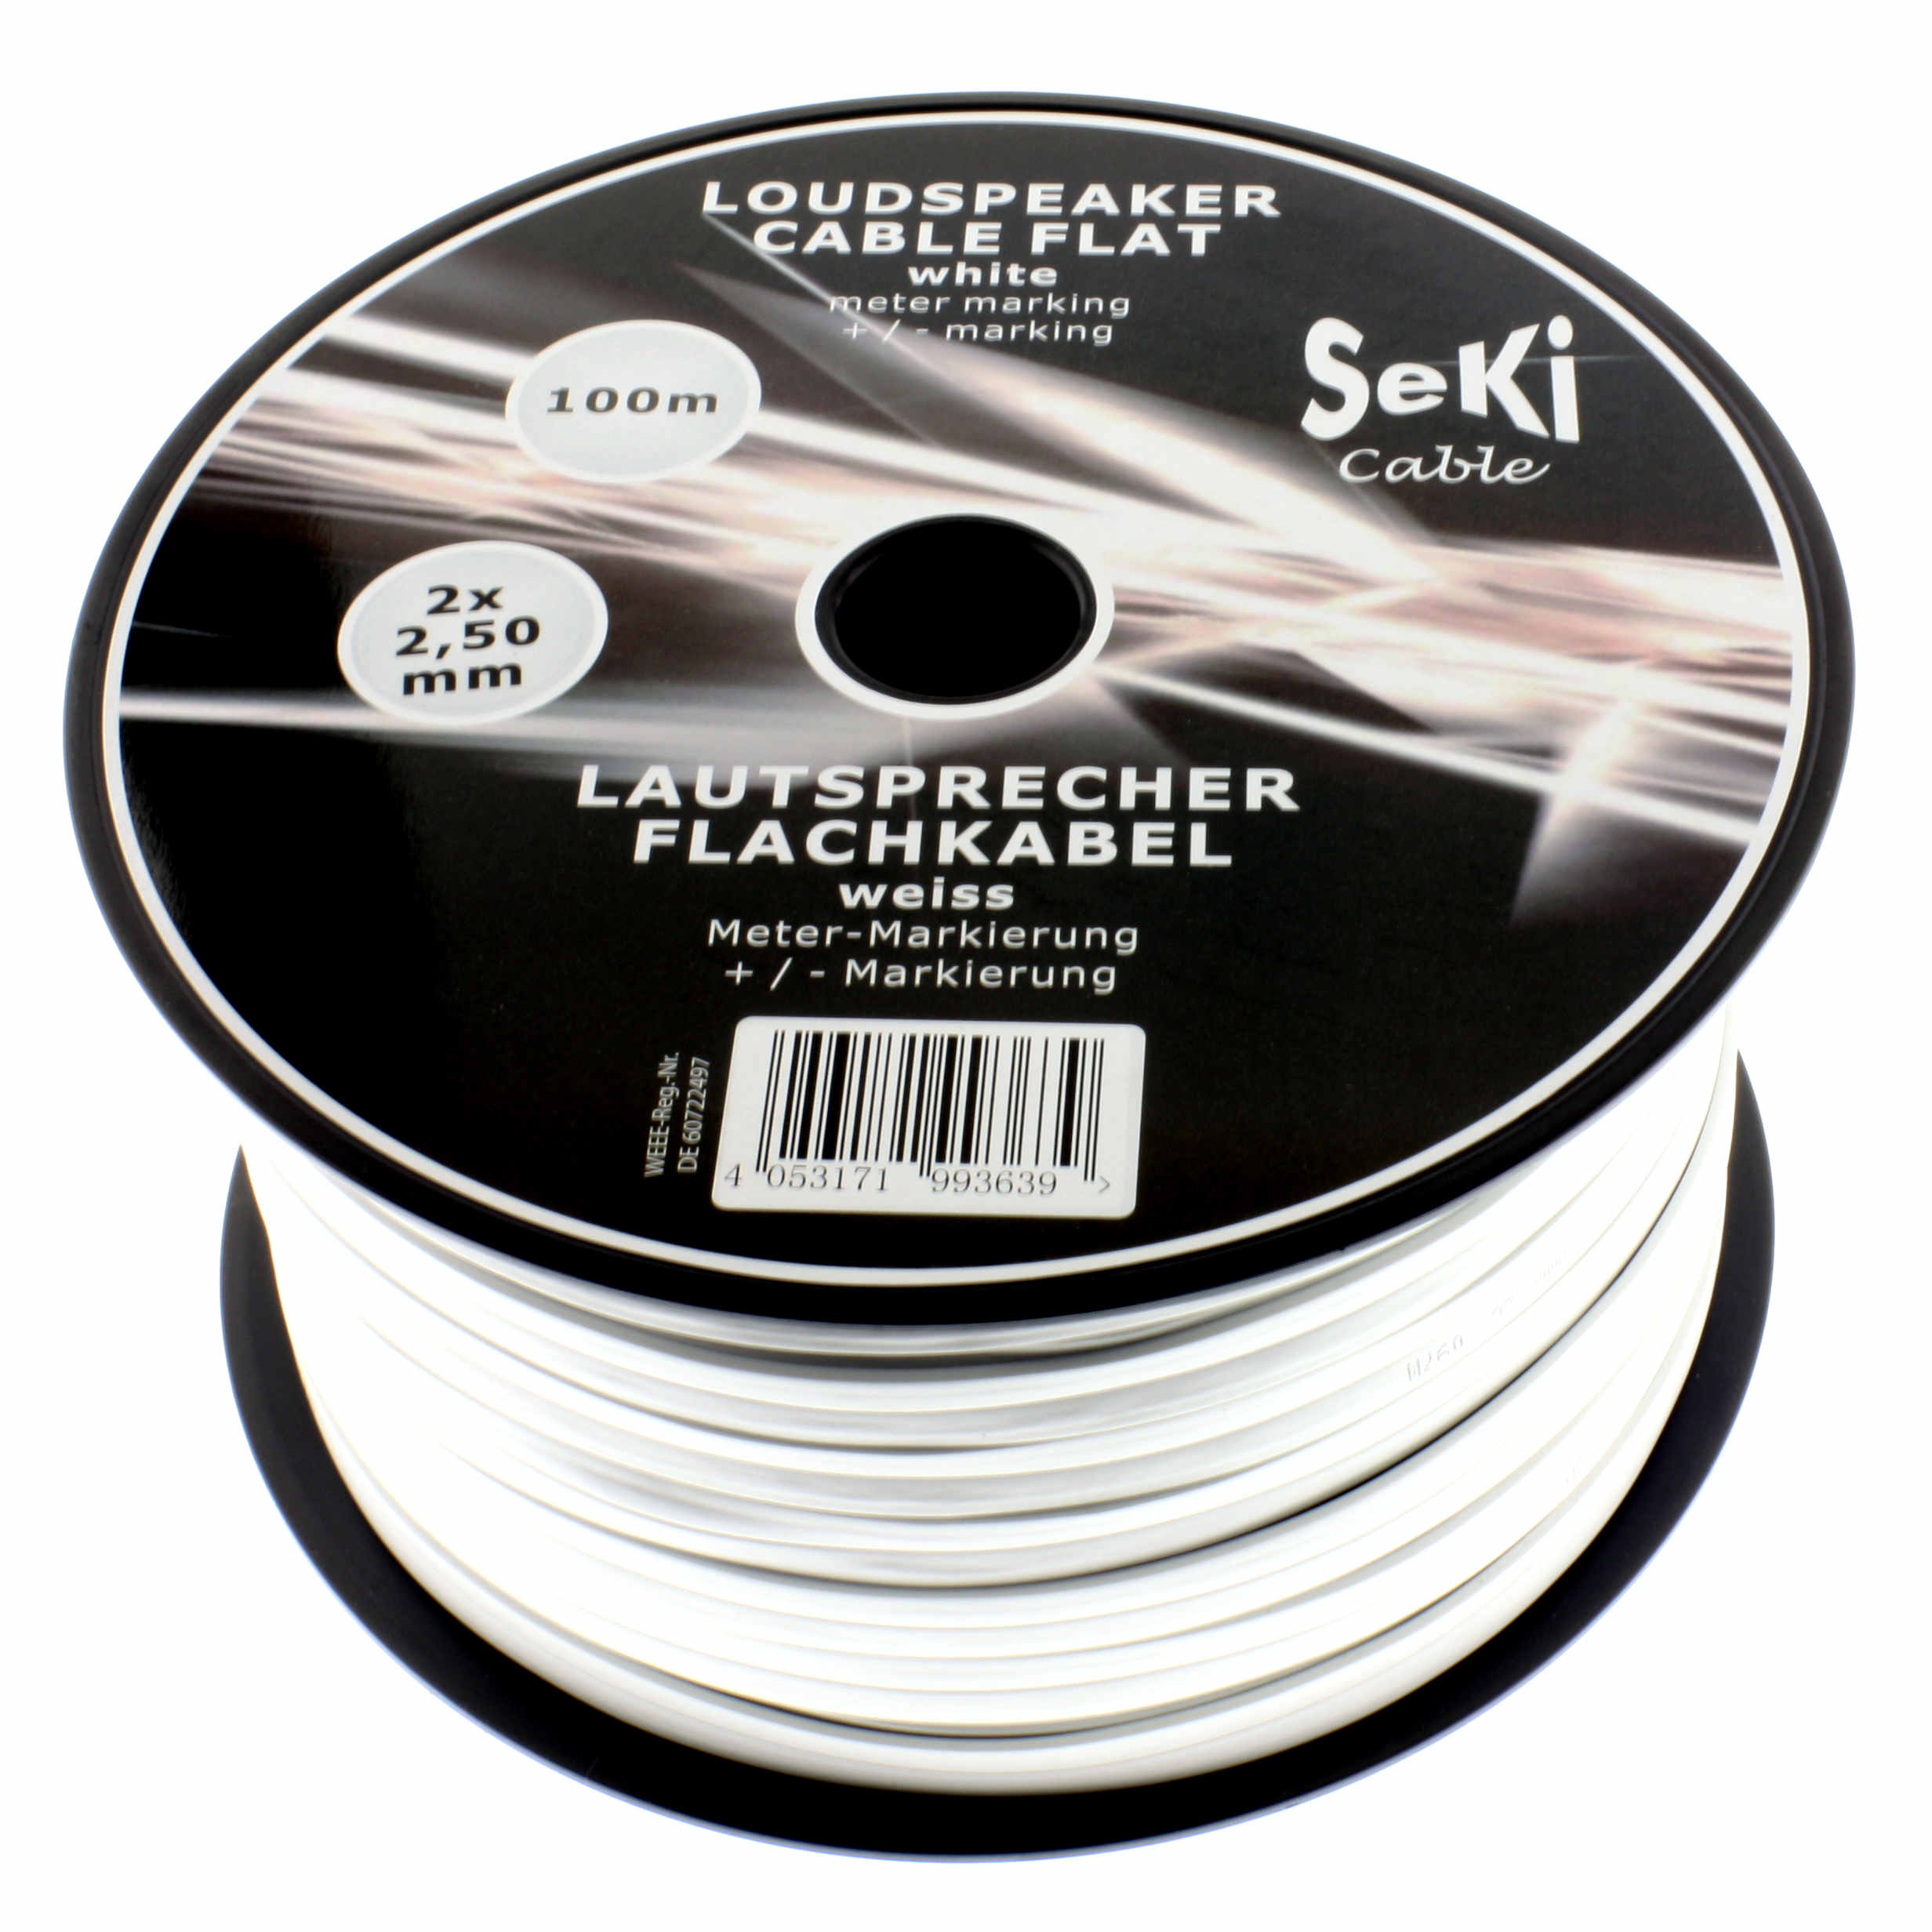 Loudspeaker cable FLAT 2,50mm, CCA, 100M, white